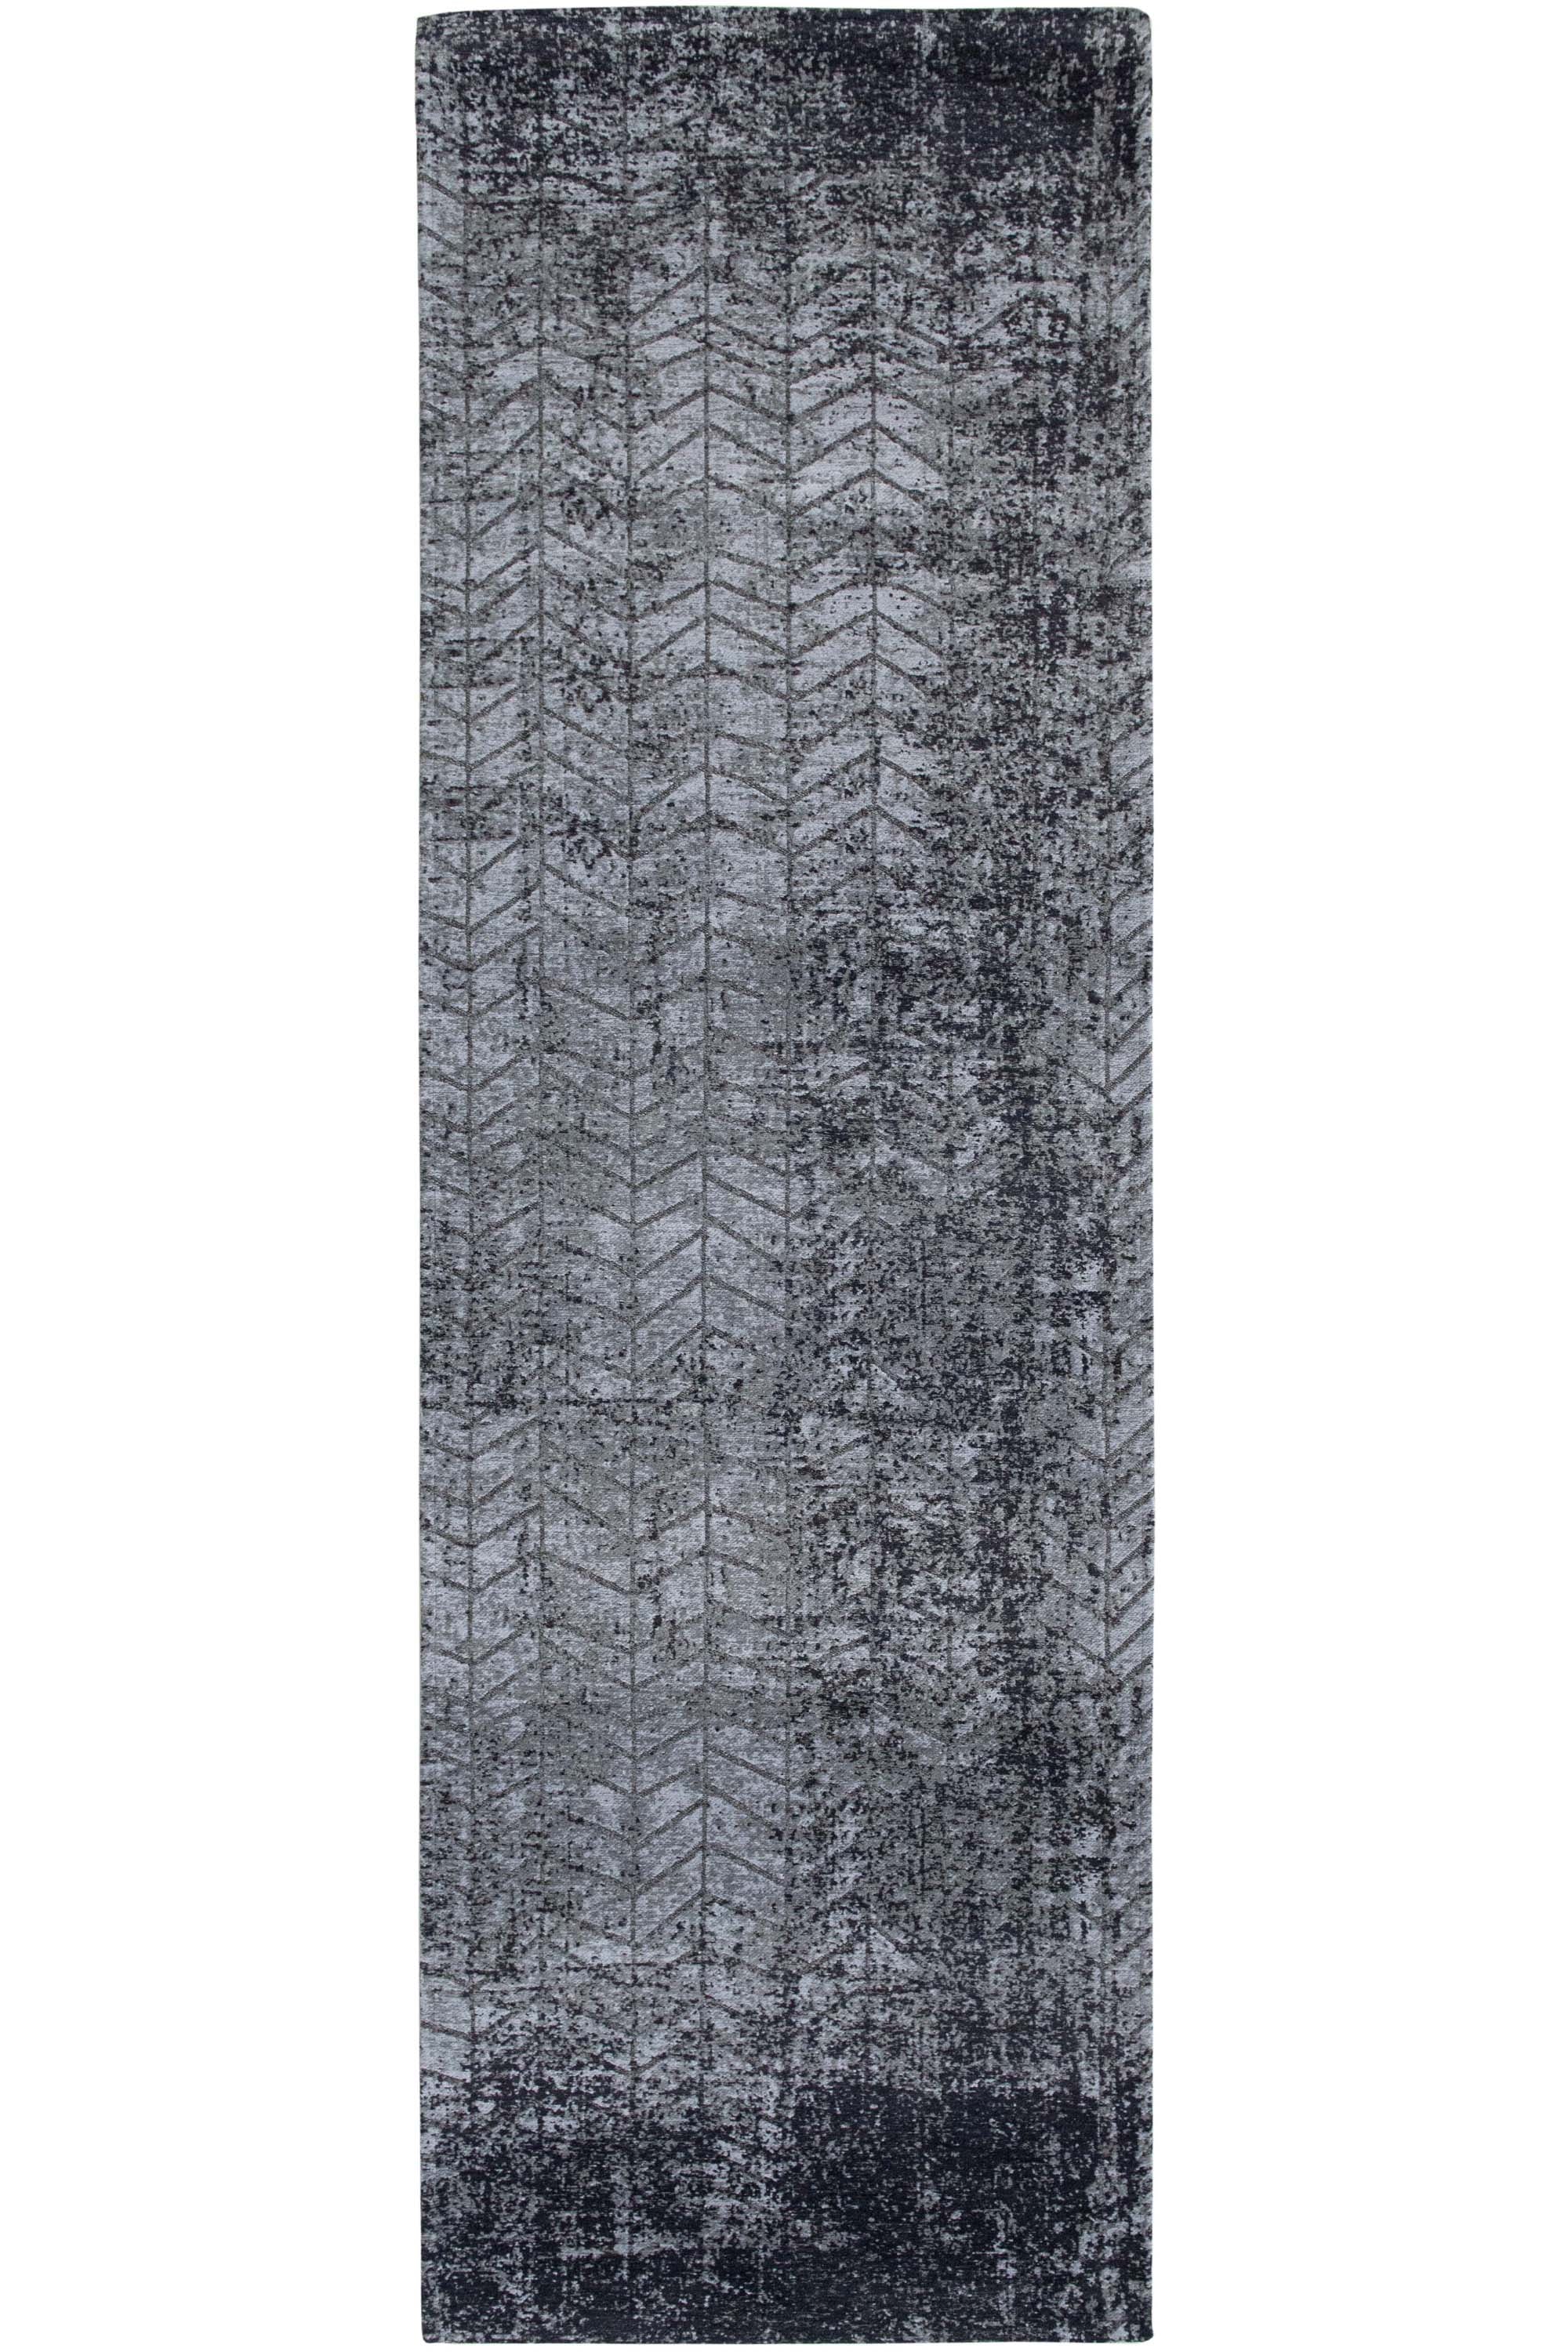 Black flatweave runner rug with faded grey chevron pattern